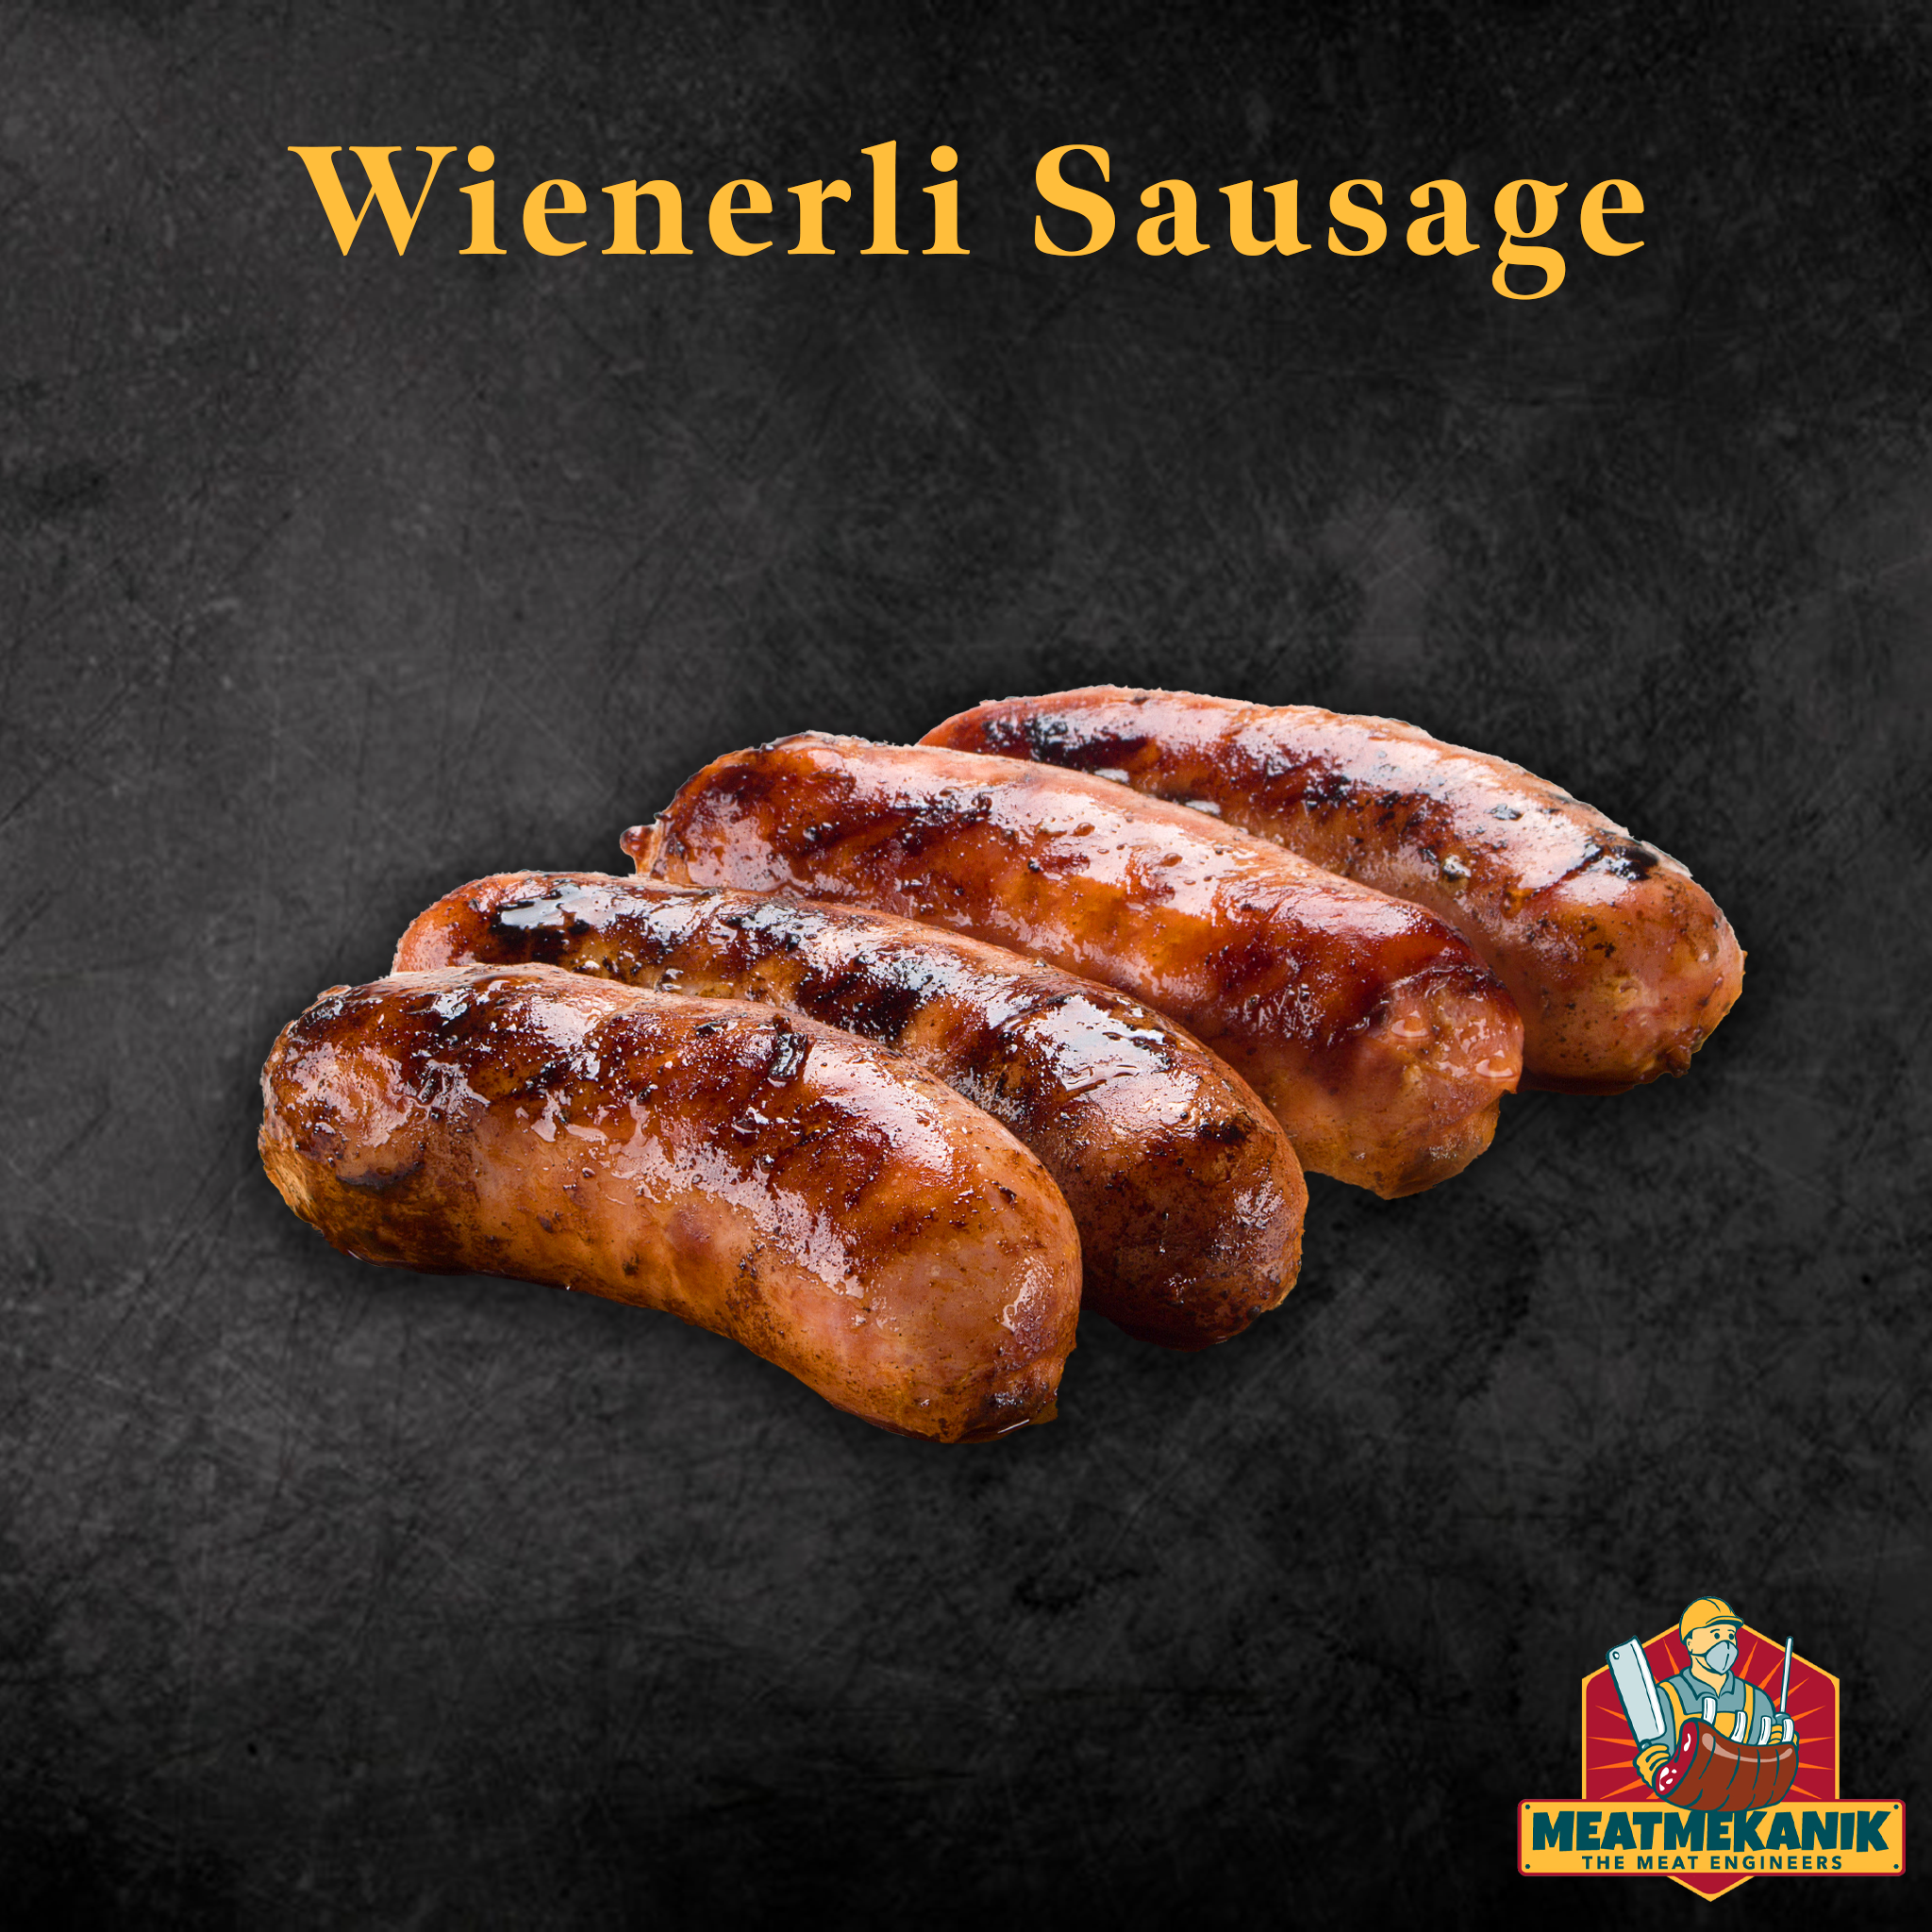 Wienerli Sausage - Meat Mekanik